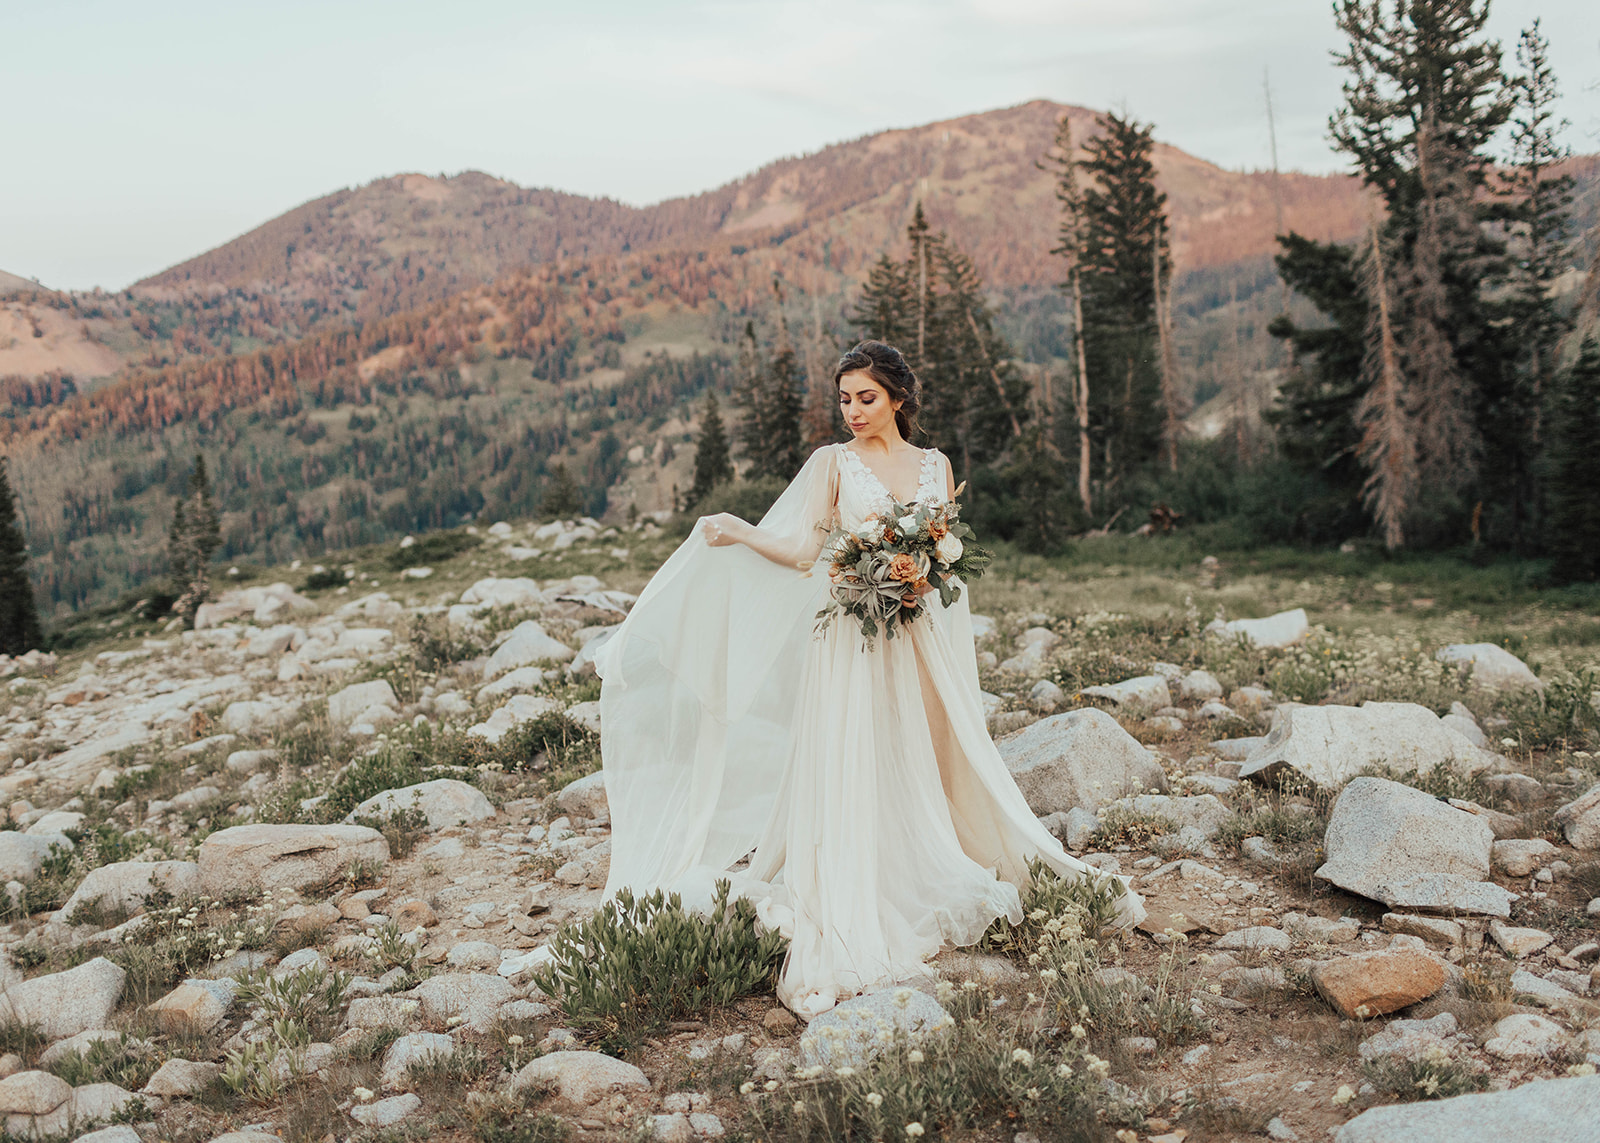 Mountain top destination bridals | Hayden and Megan Photo + Film